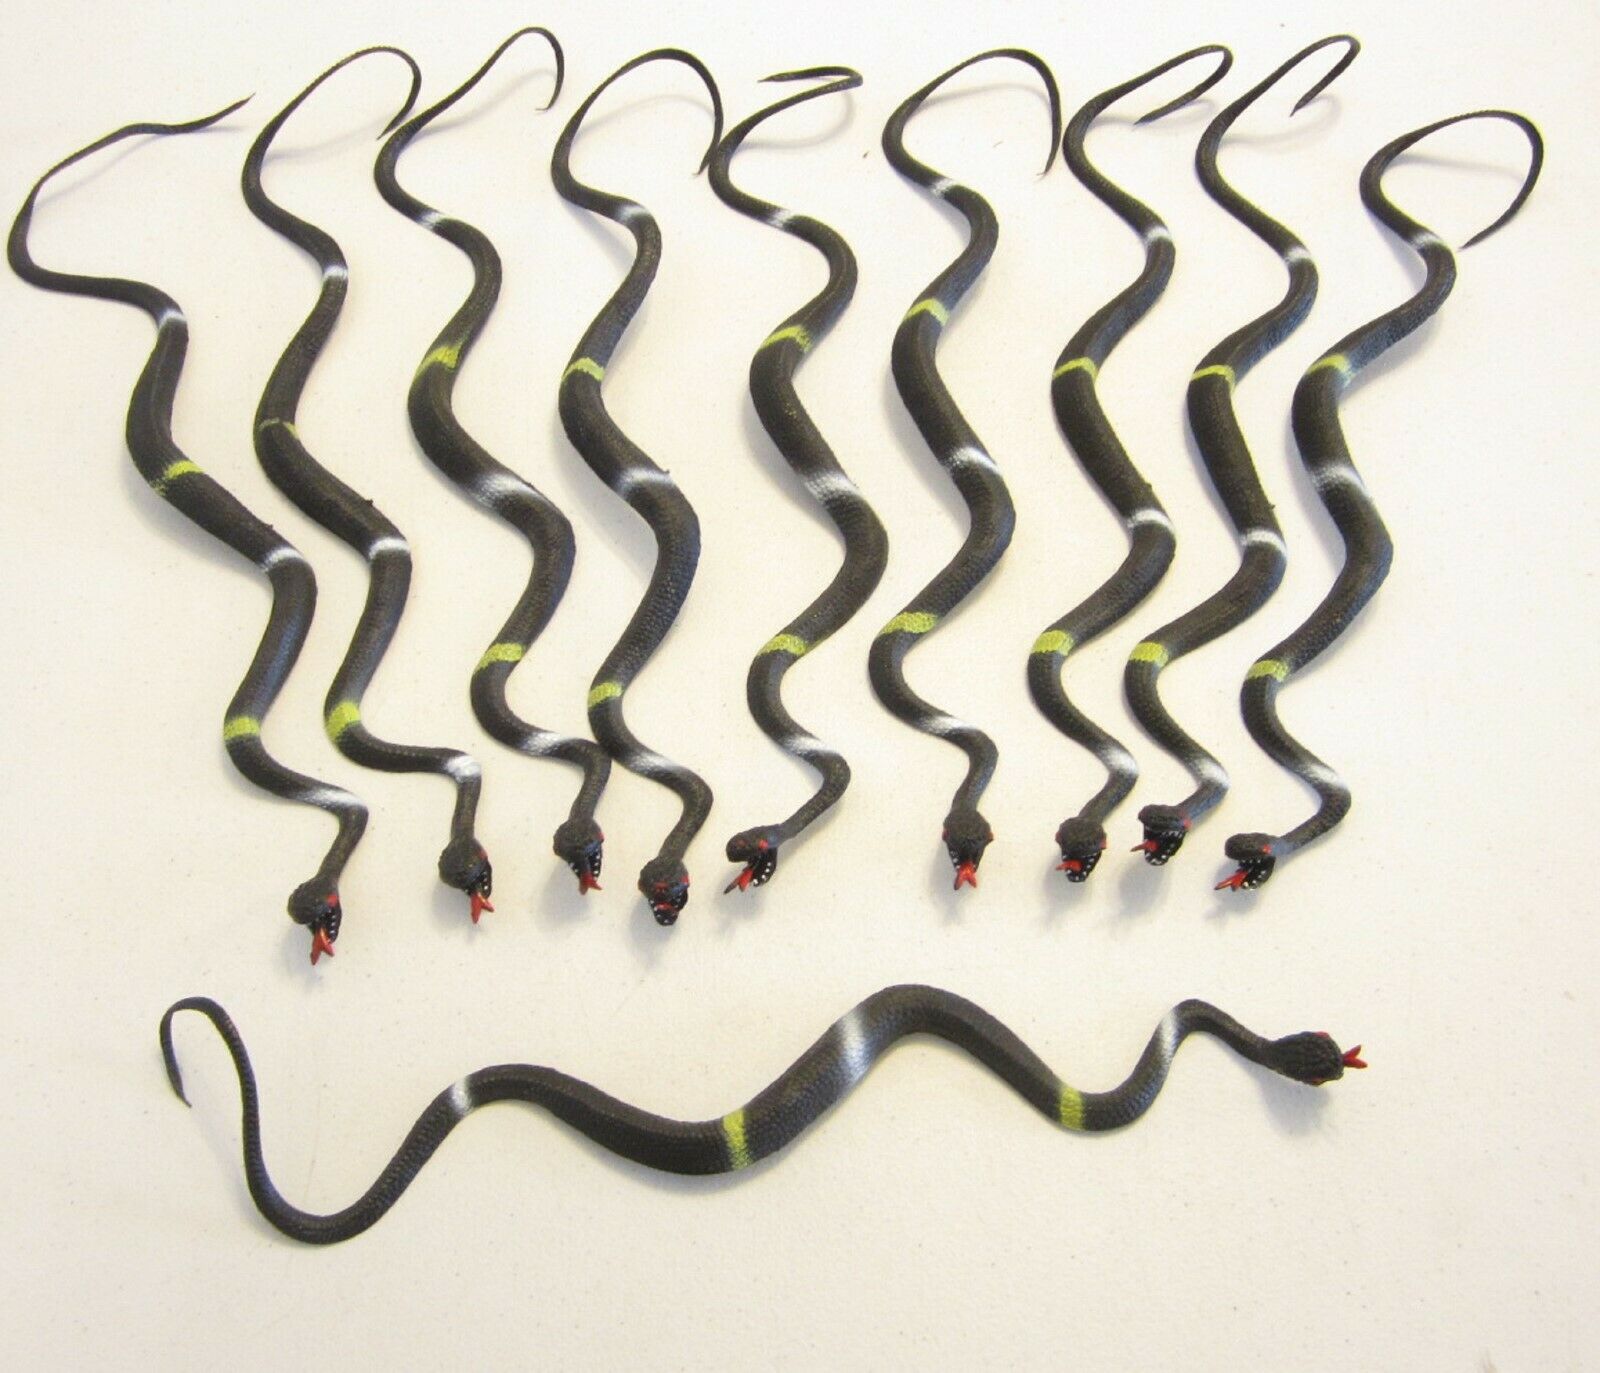 10 New Black Rubber Snakes 24" Toy Reptile Fake Pretend Snake Gag Gift